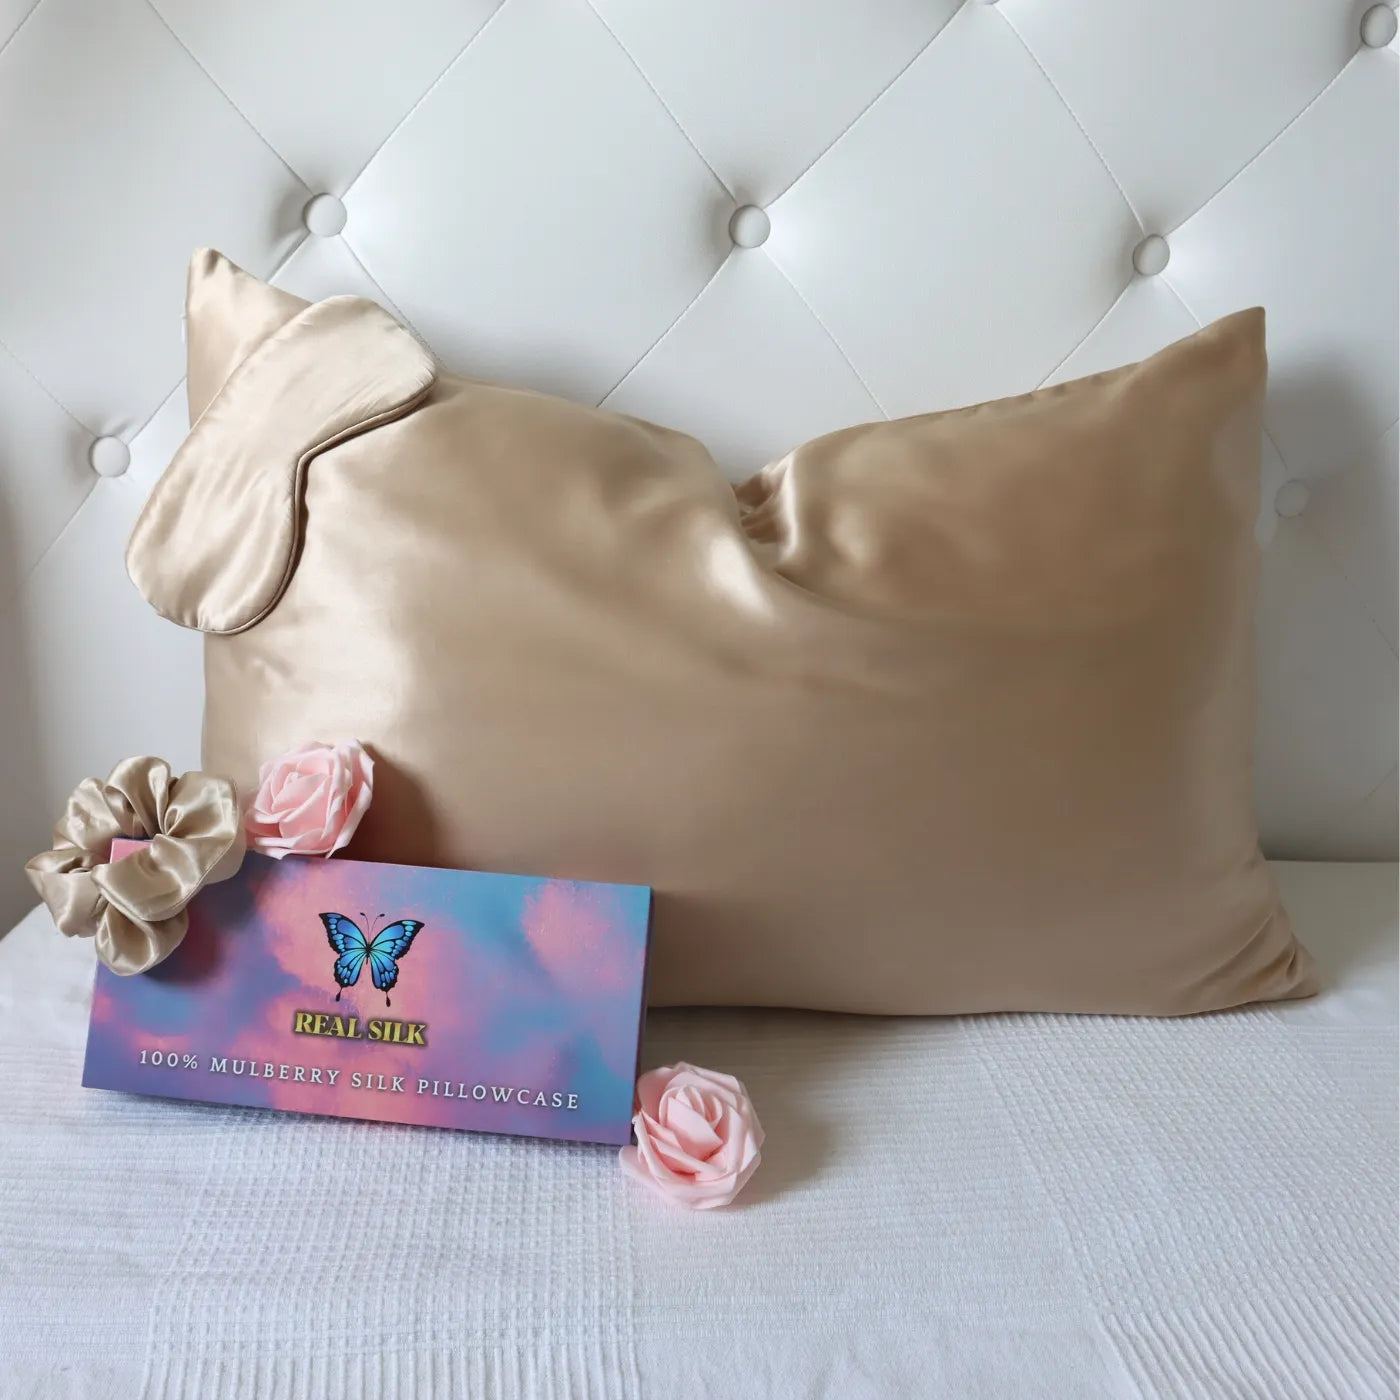 Mulberry Silk Gift Set - 22 Momme Silk Pillowcase, Sleeping Mask & Hair Scrunchie Gold